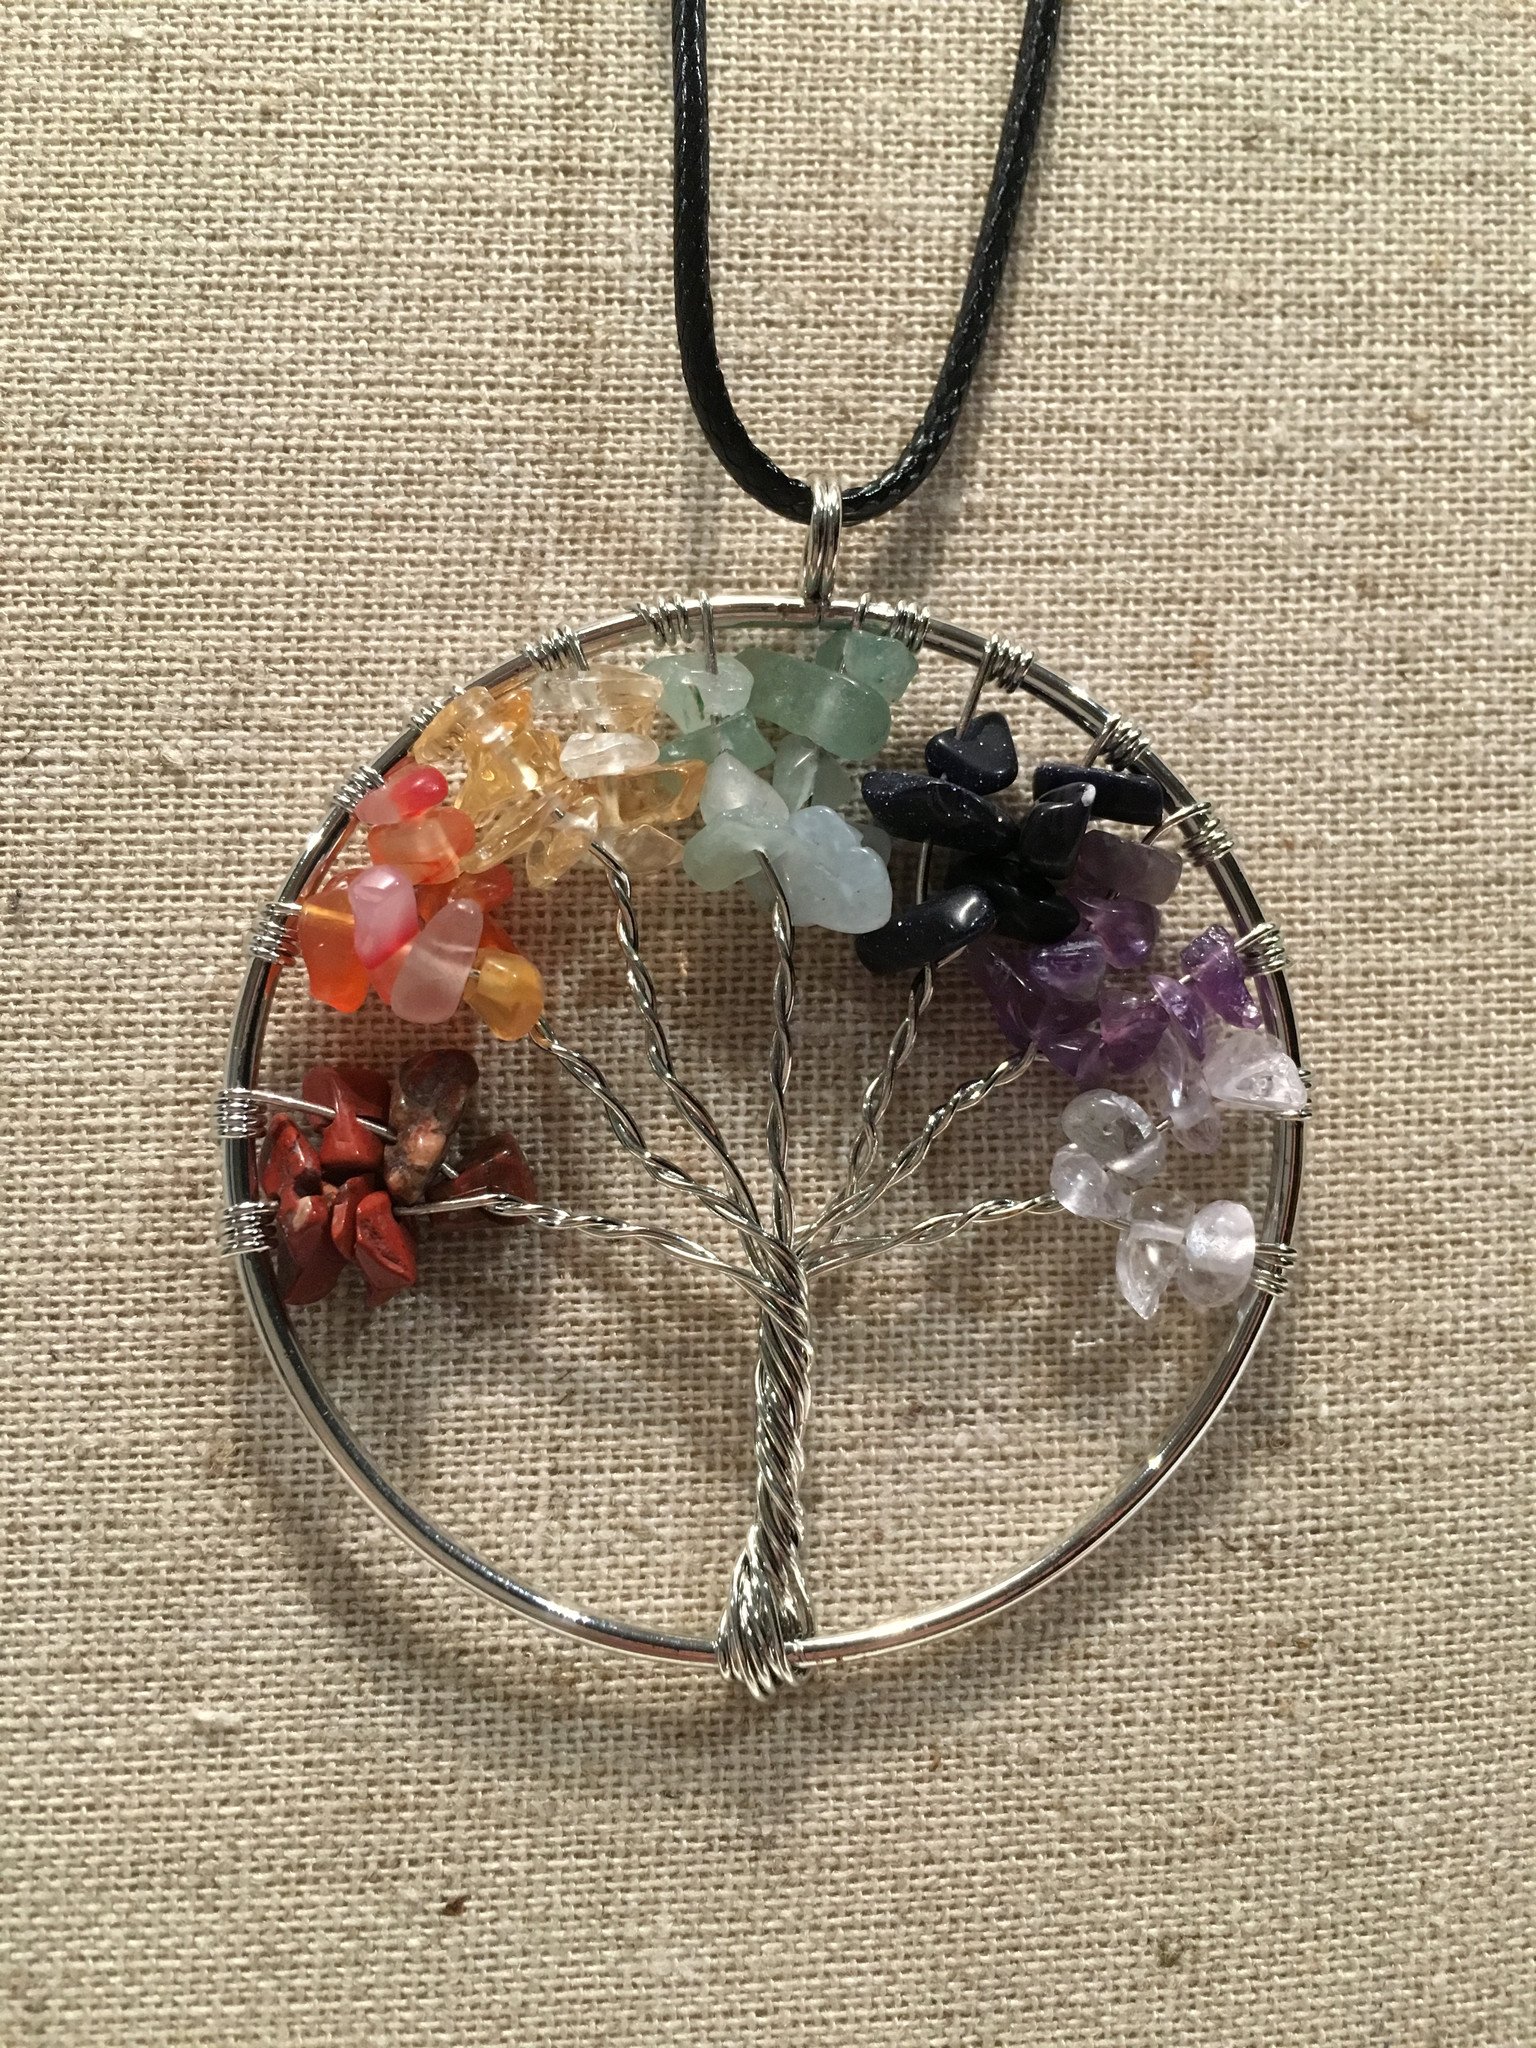 Chakra Tree of Life Quartz Teen Adult 17 - 19 inch Necklace Rainbow Natural Stone Wisdom Amethyst Lapis Turquoise - image 1 of 4